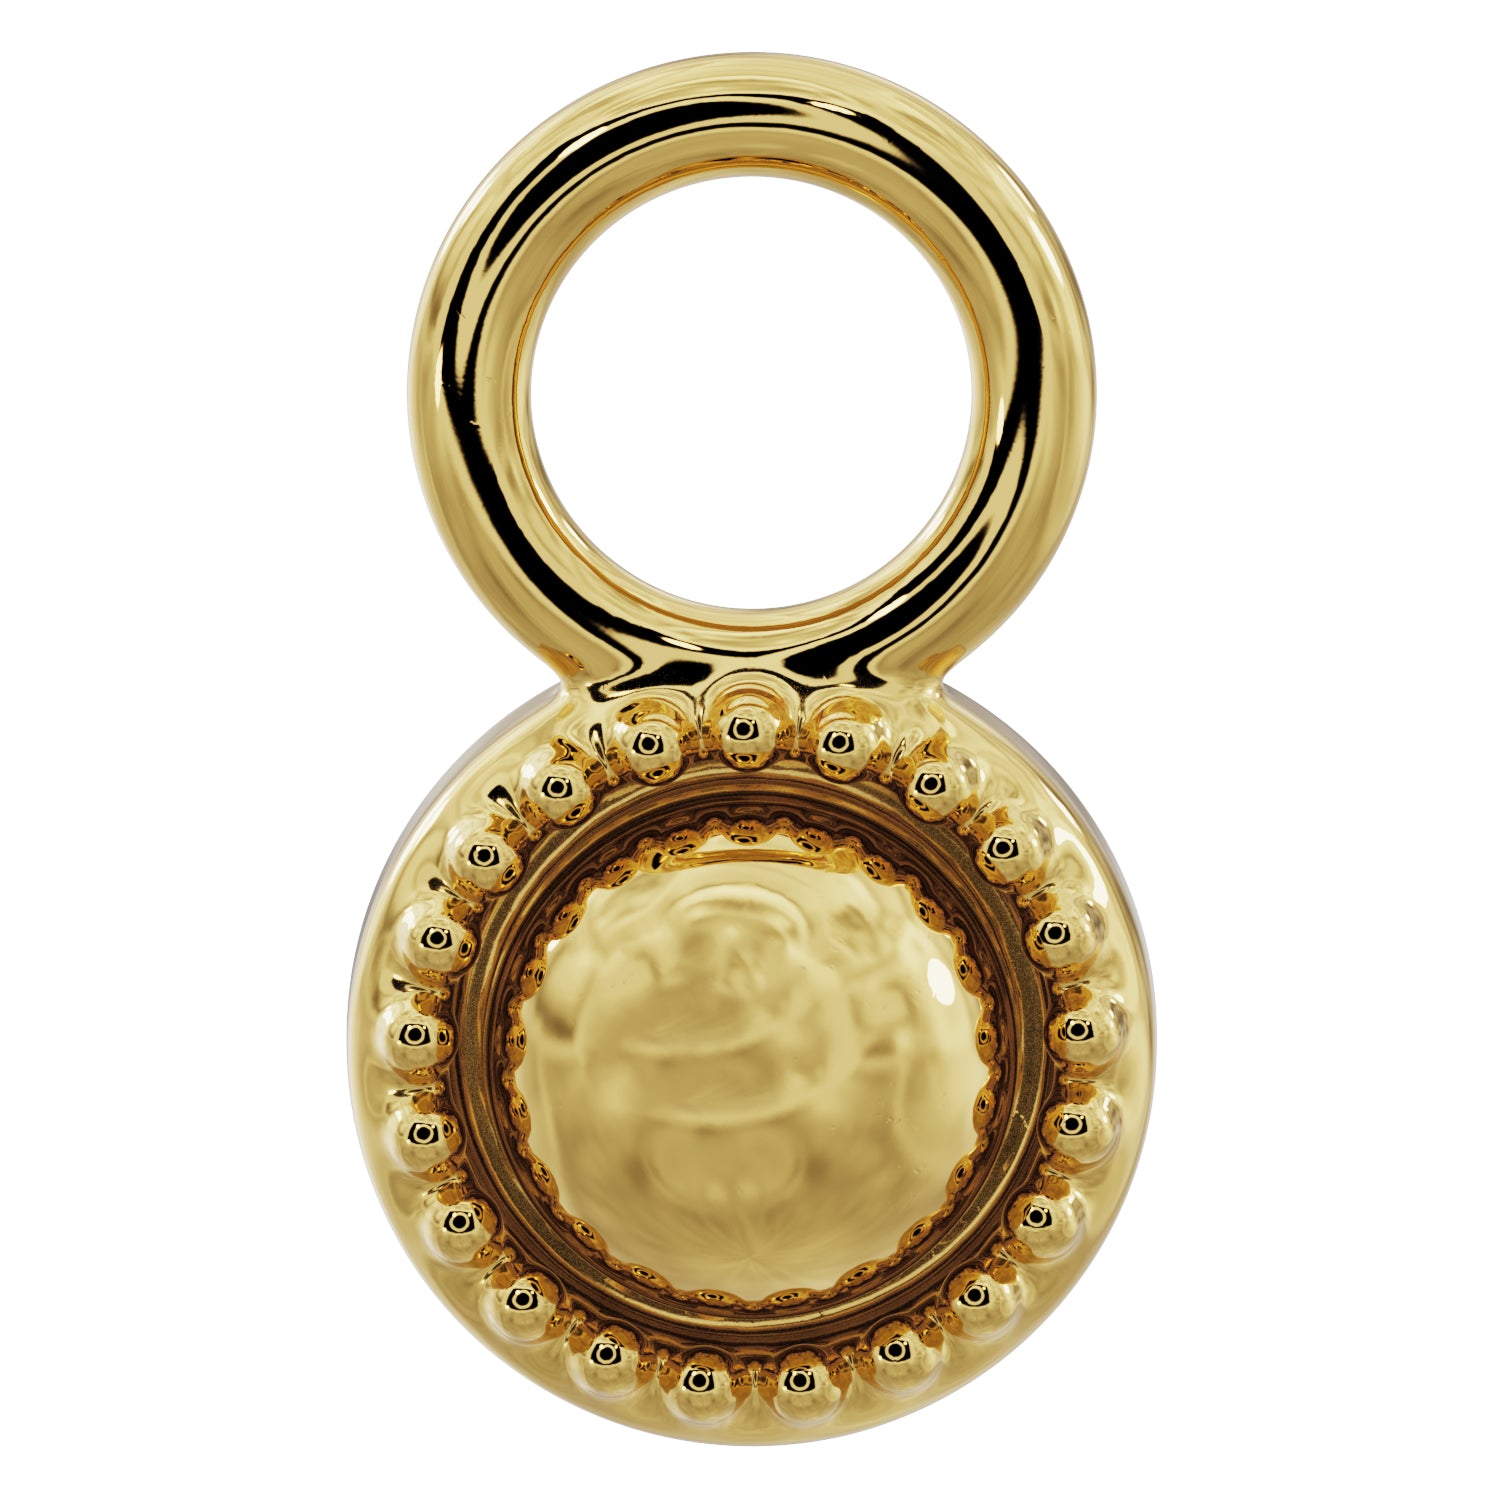 Milgrain Charm Accessory for Piercing Jewelry-14K Yellow Gold